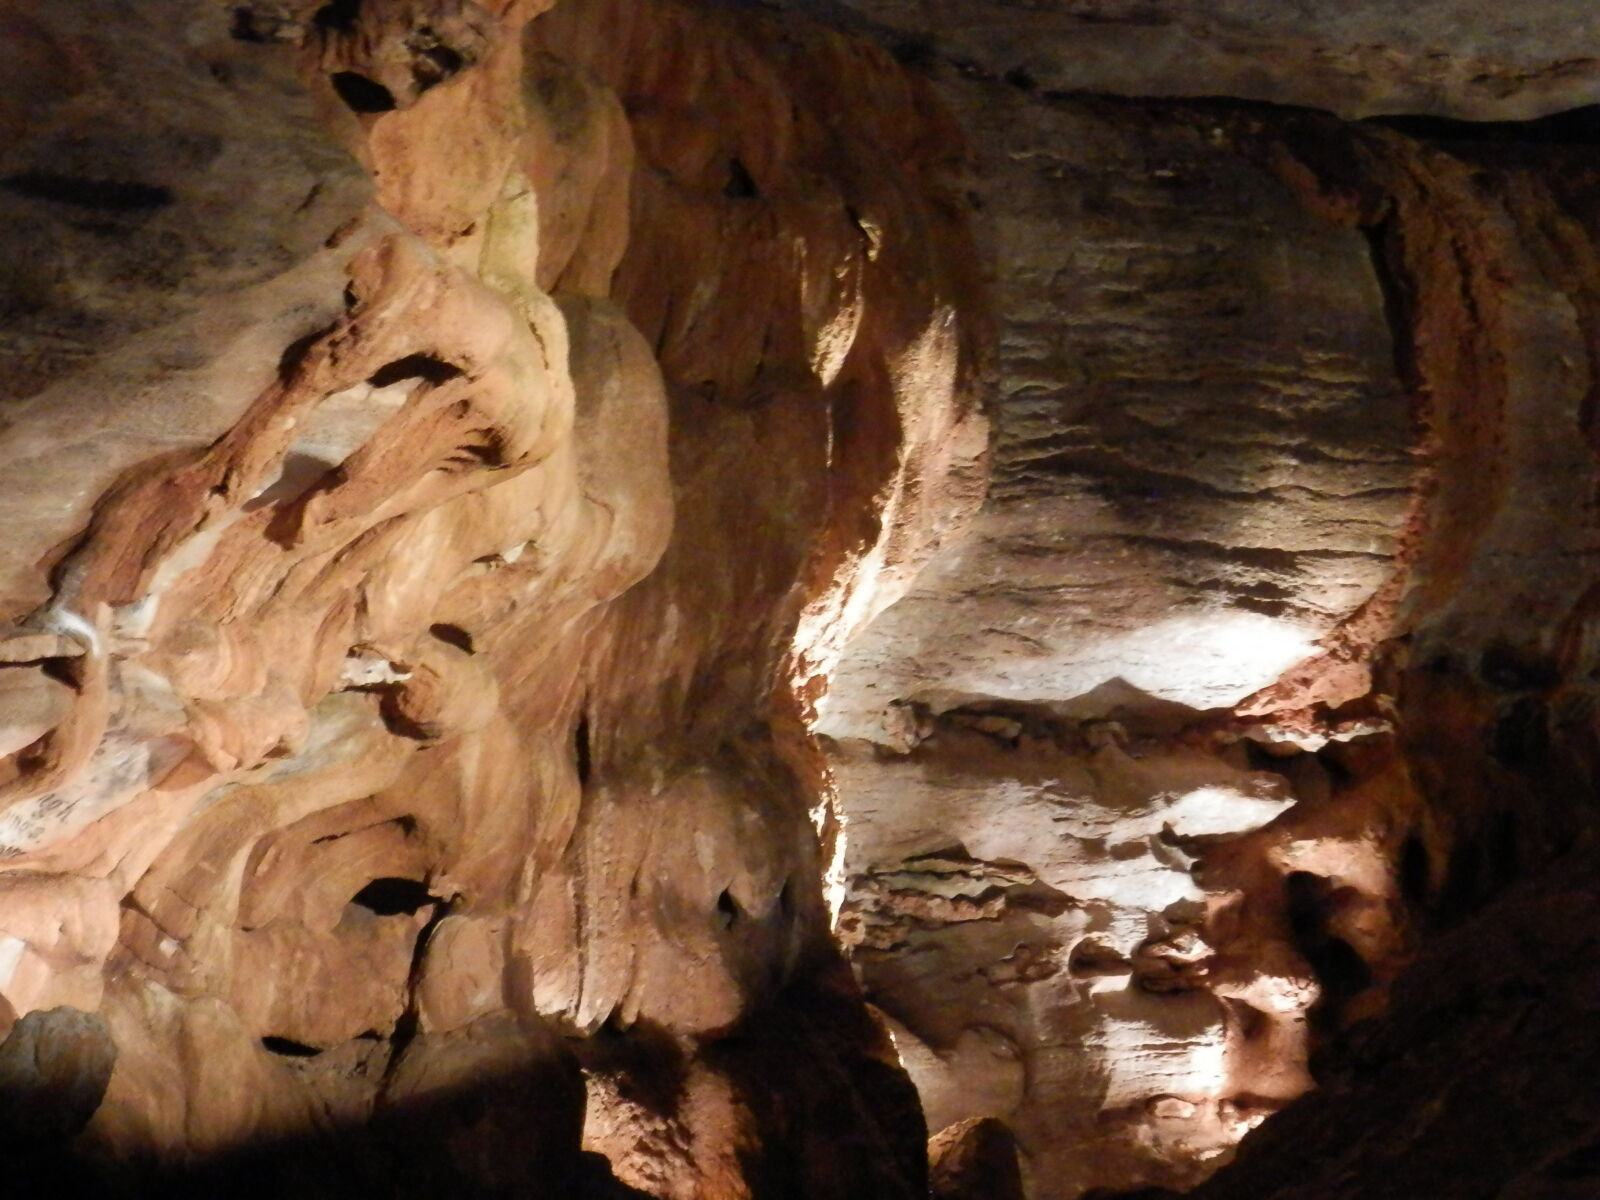 Olympus SZ-14 sample photo. Cave, cavern, fantastic, caverns photography